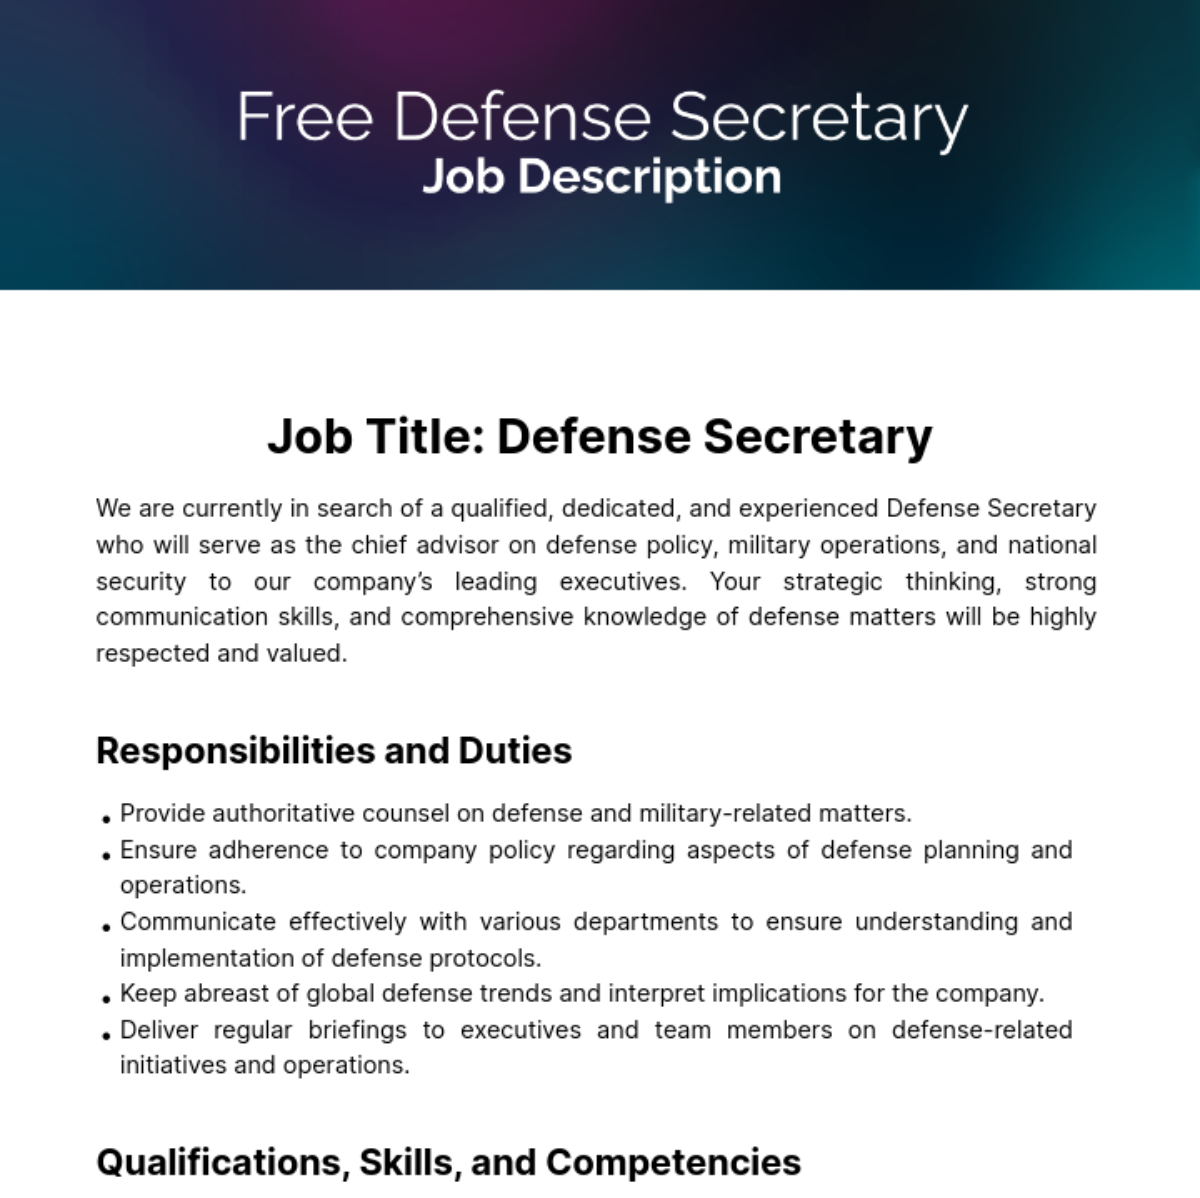 Free Defense Secretary Job Description Template